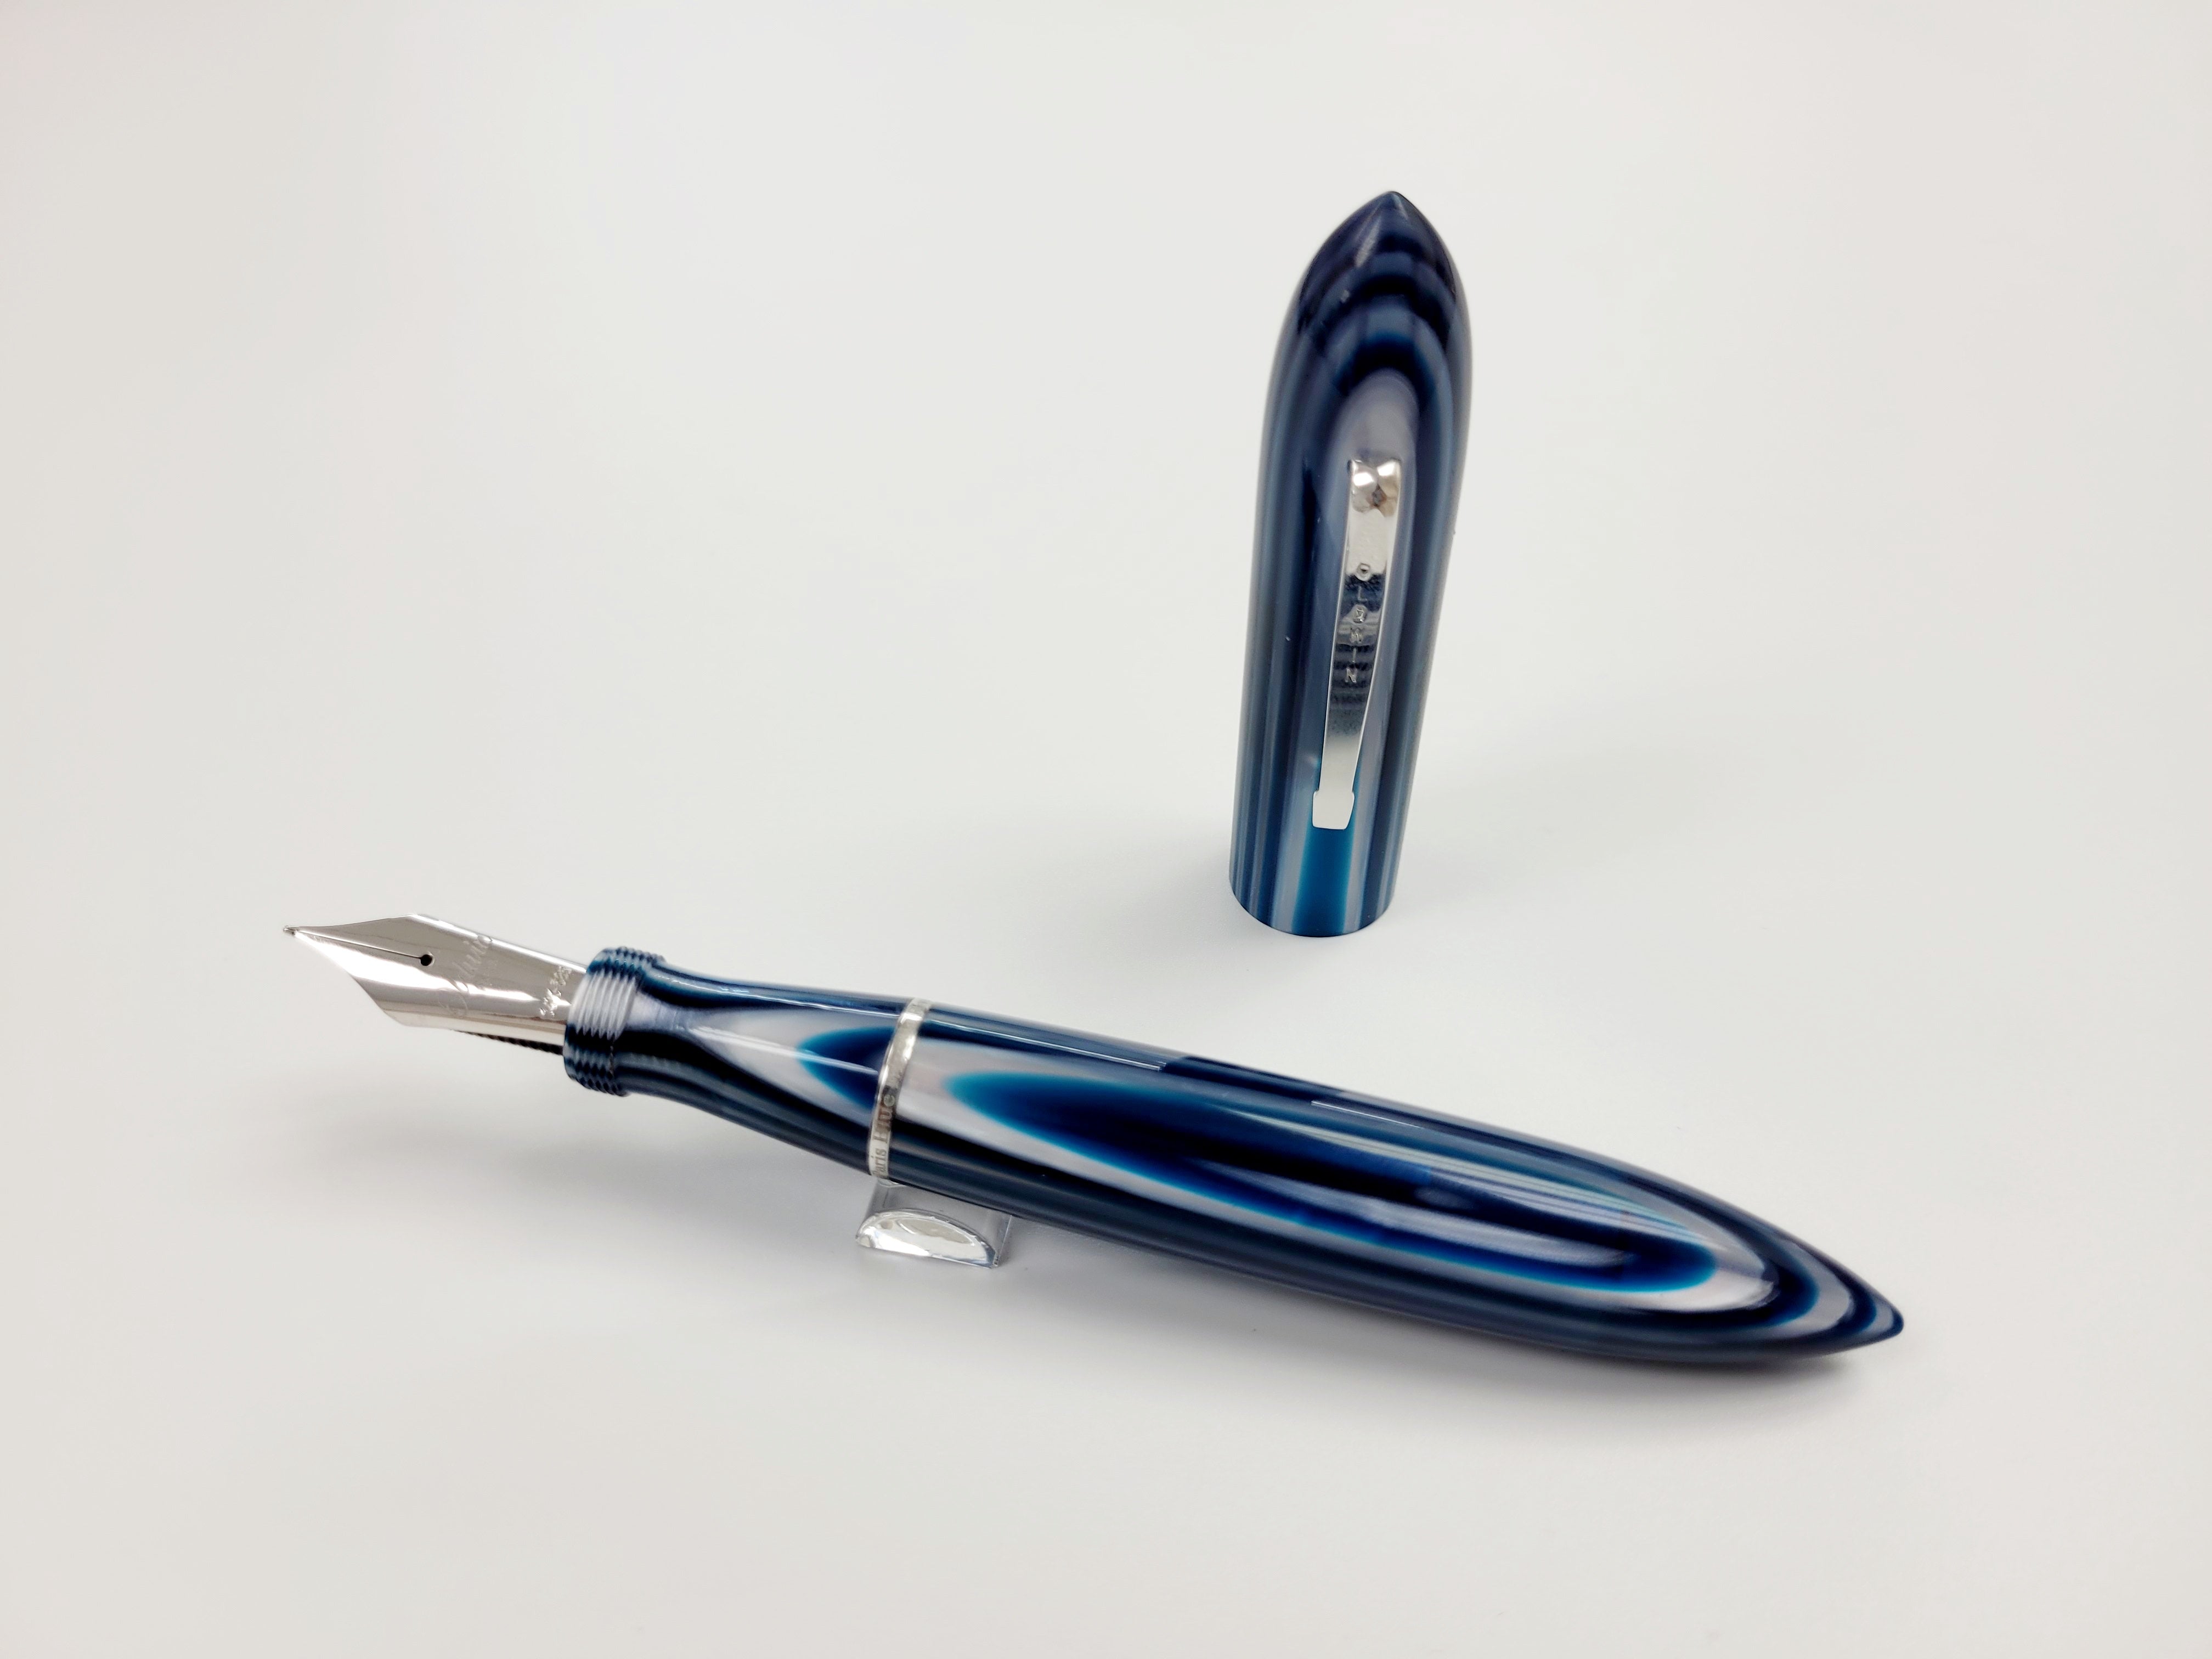 Oldwin Paris Torpedo Blue Mystic River Limited Edition of 100 Pens